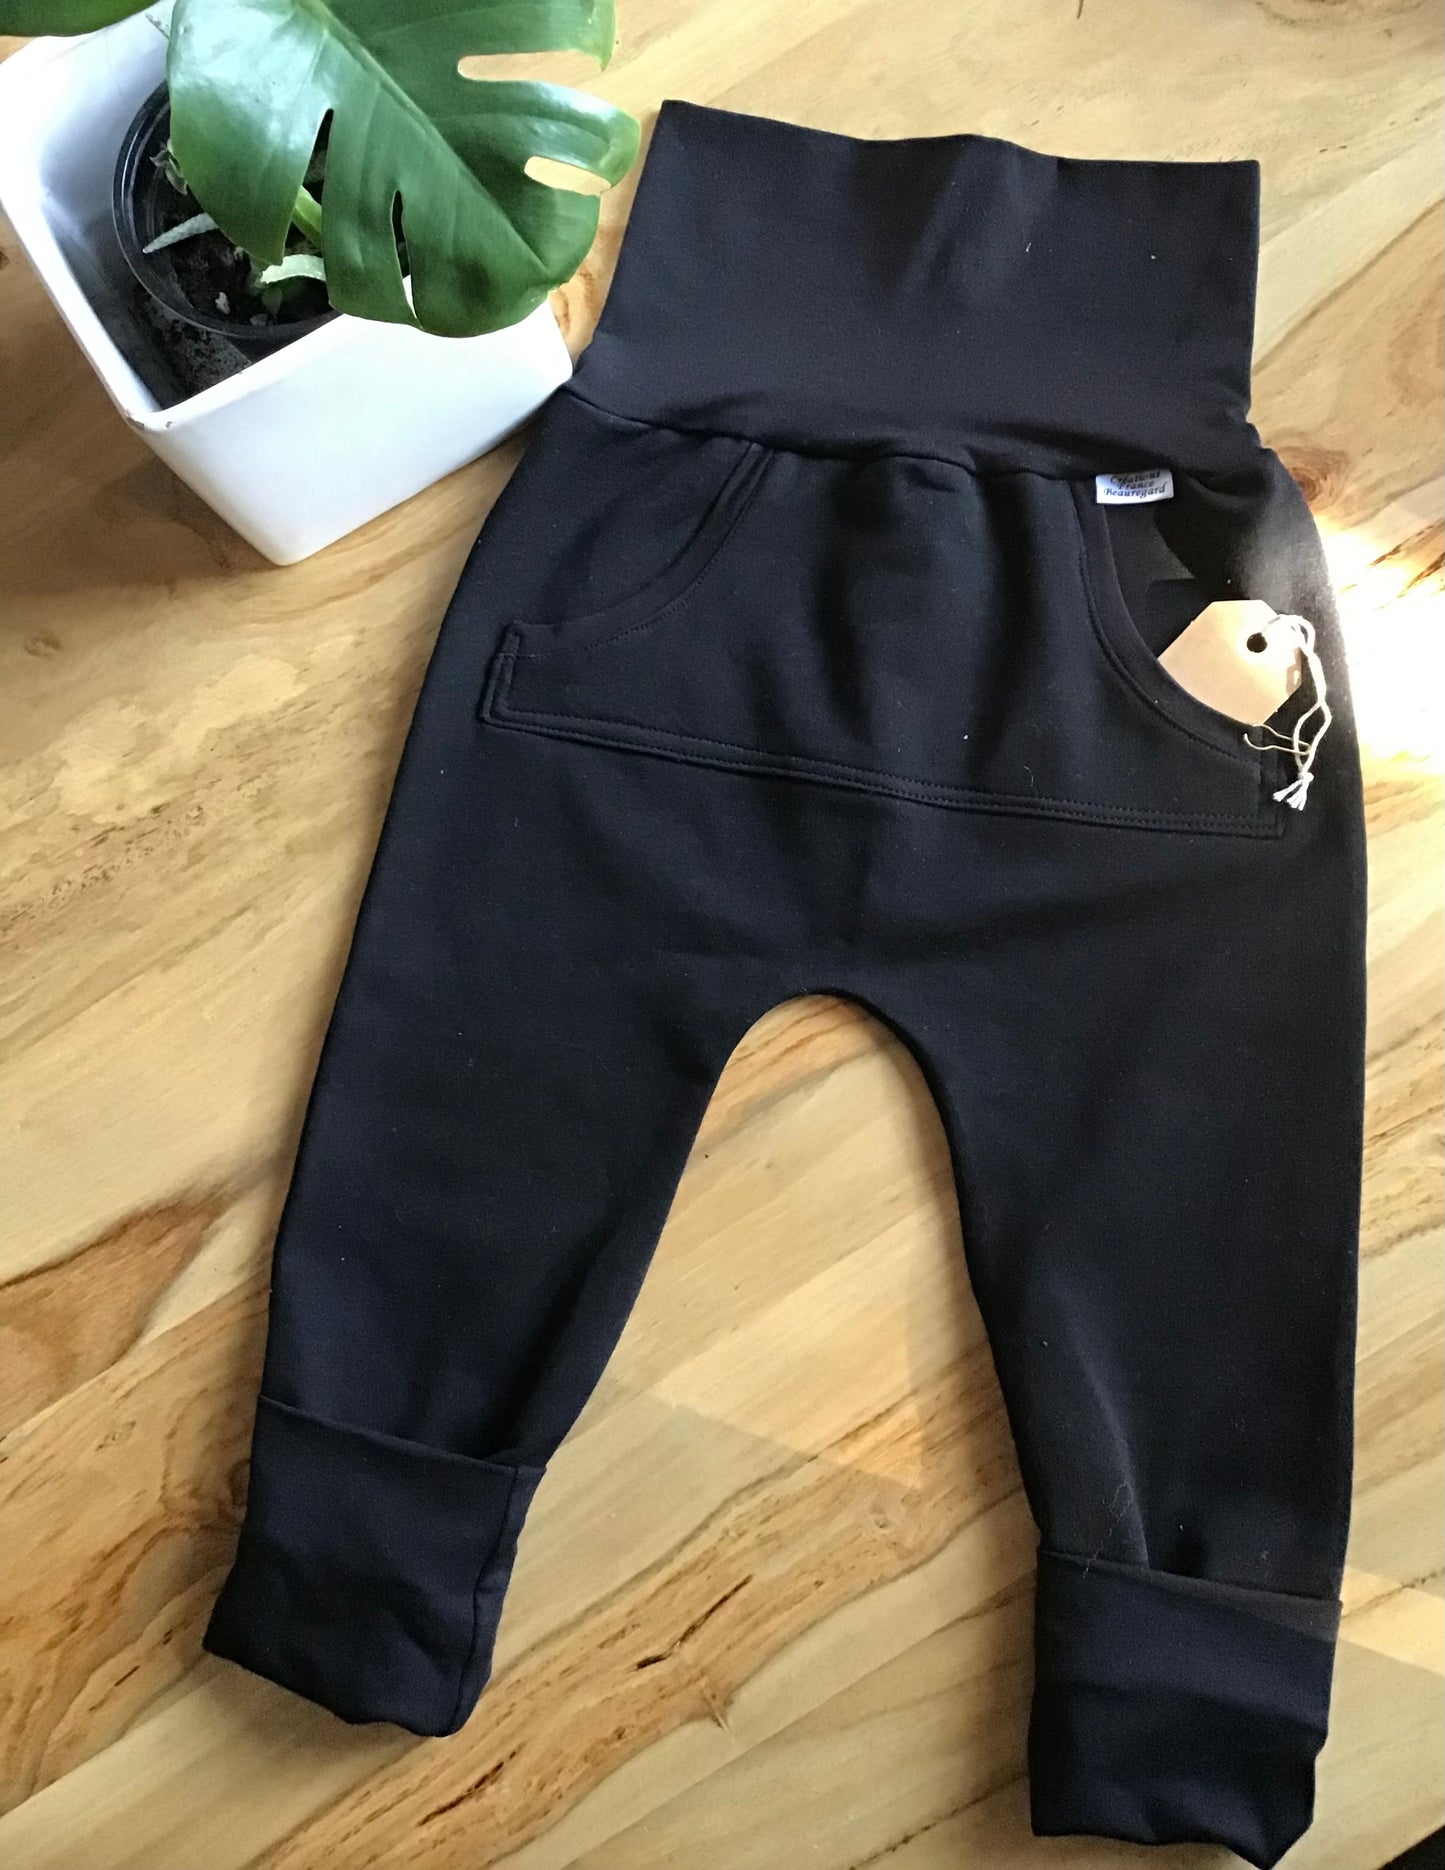 Black harem pants with kangaroo pocket ready to go